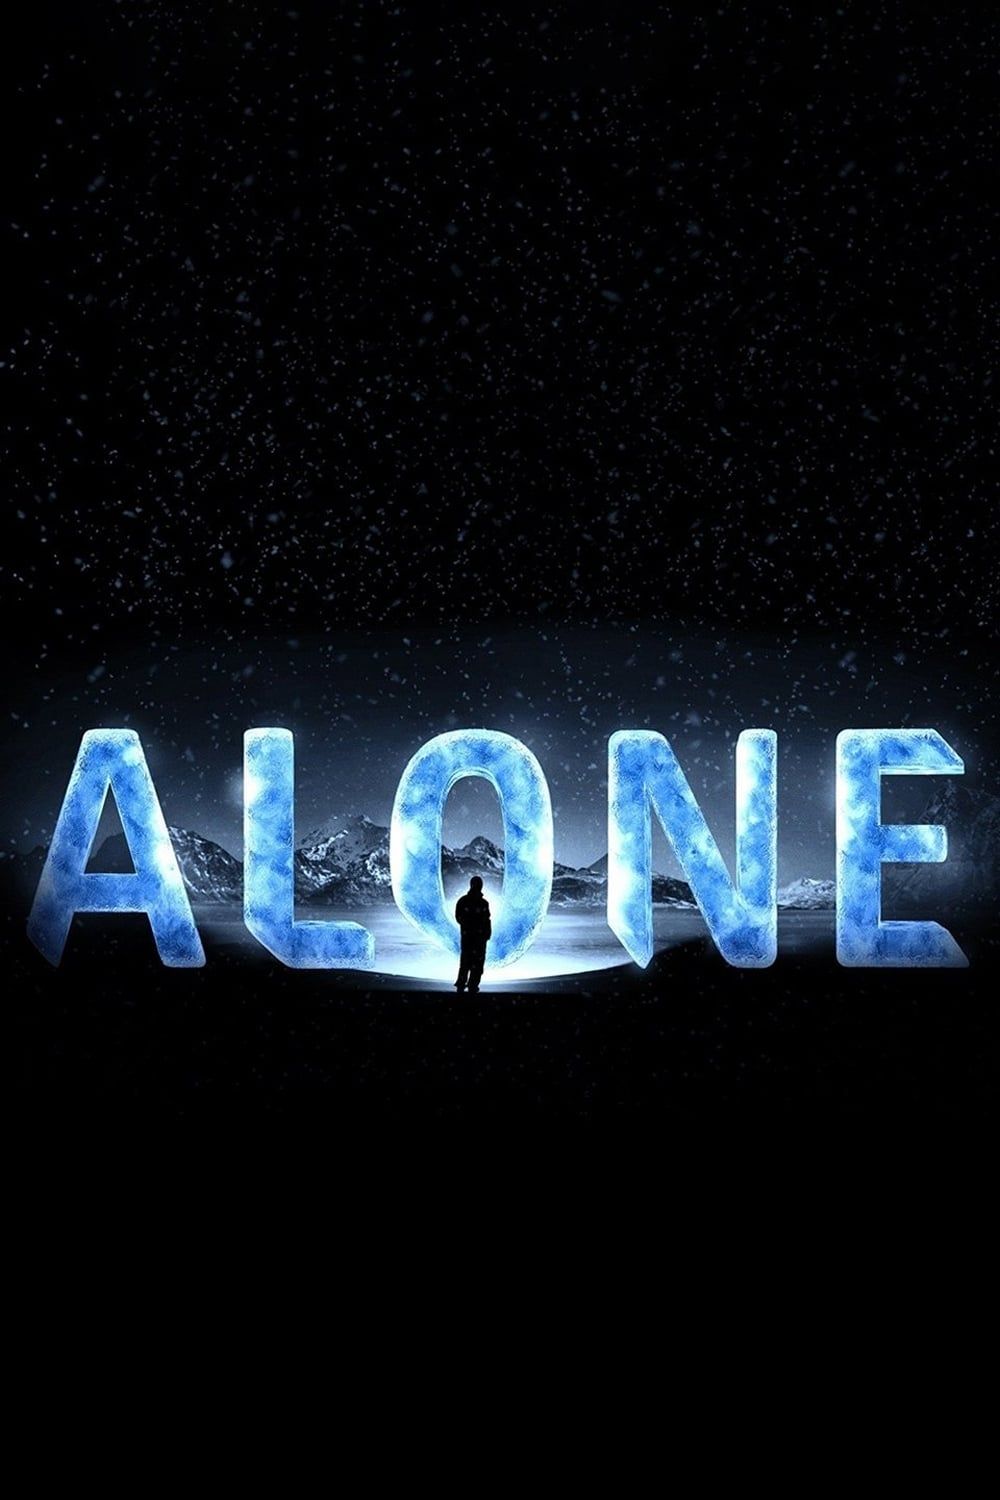 Alone: Watch Alone Online